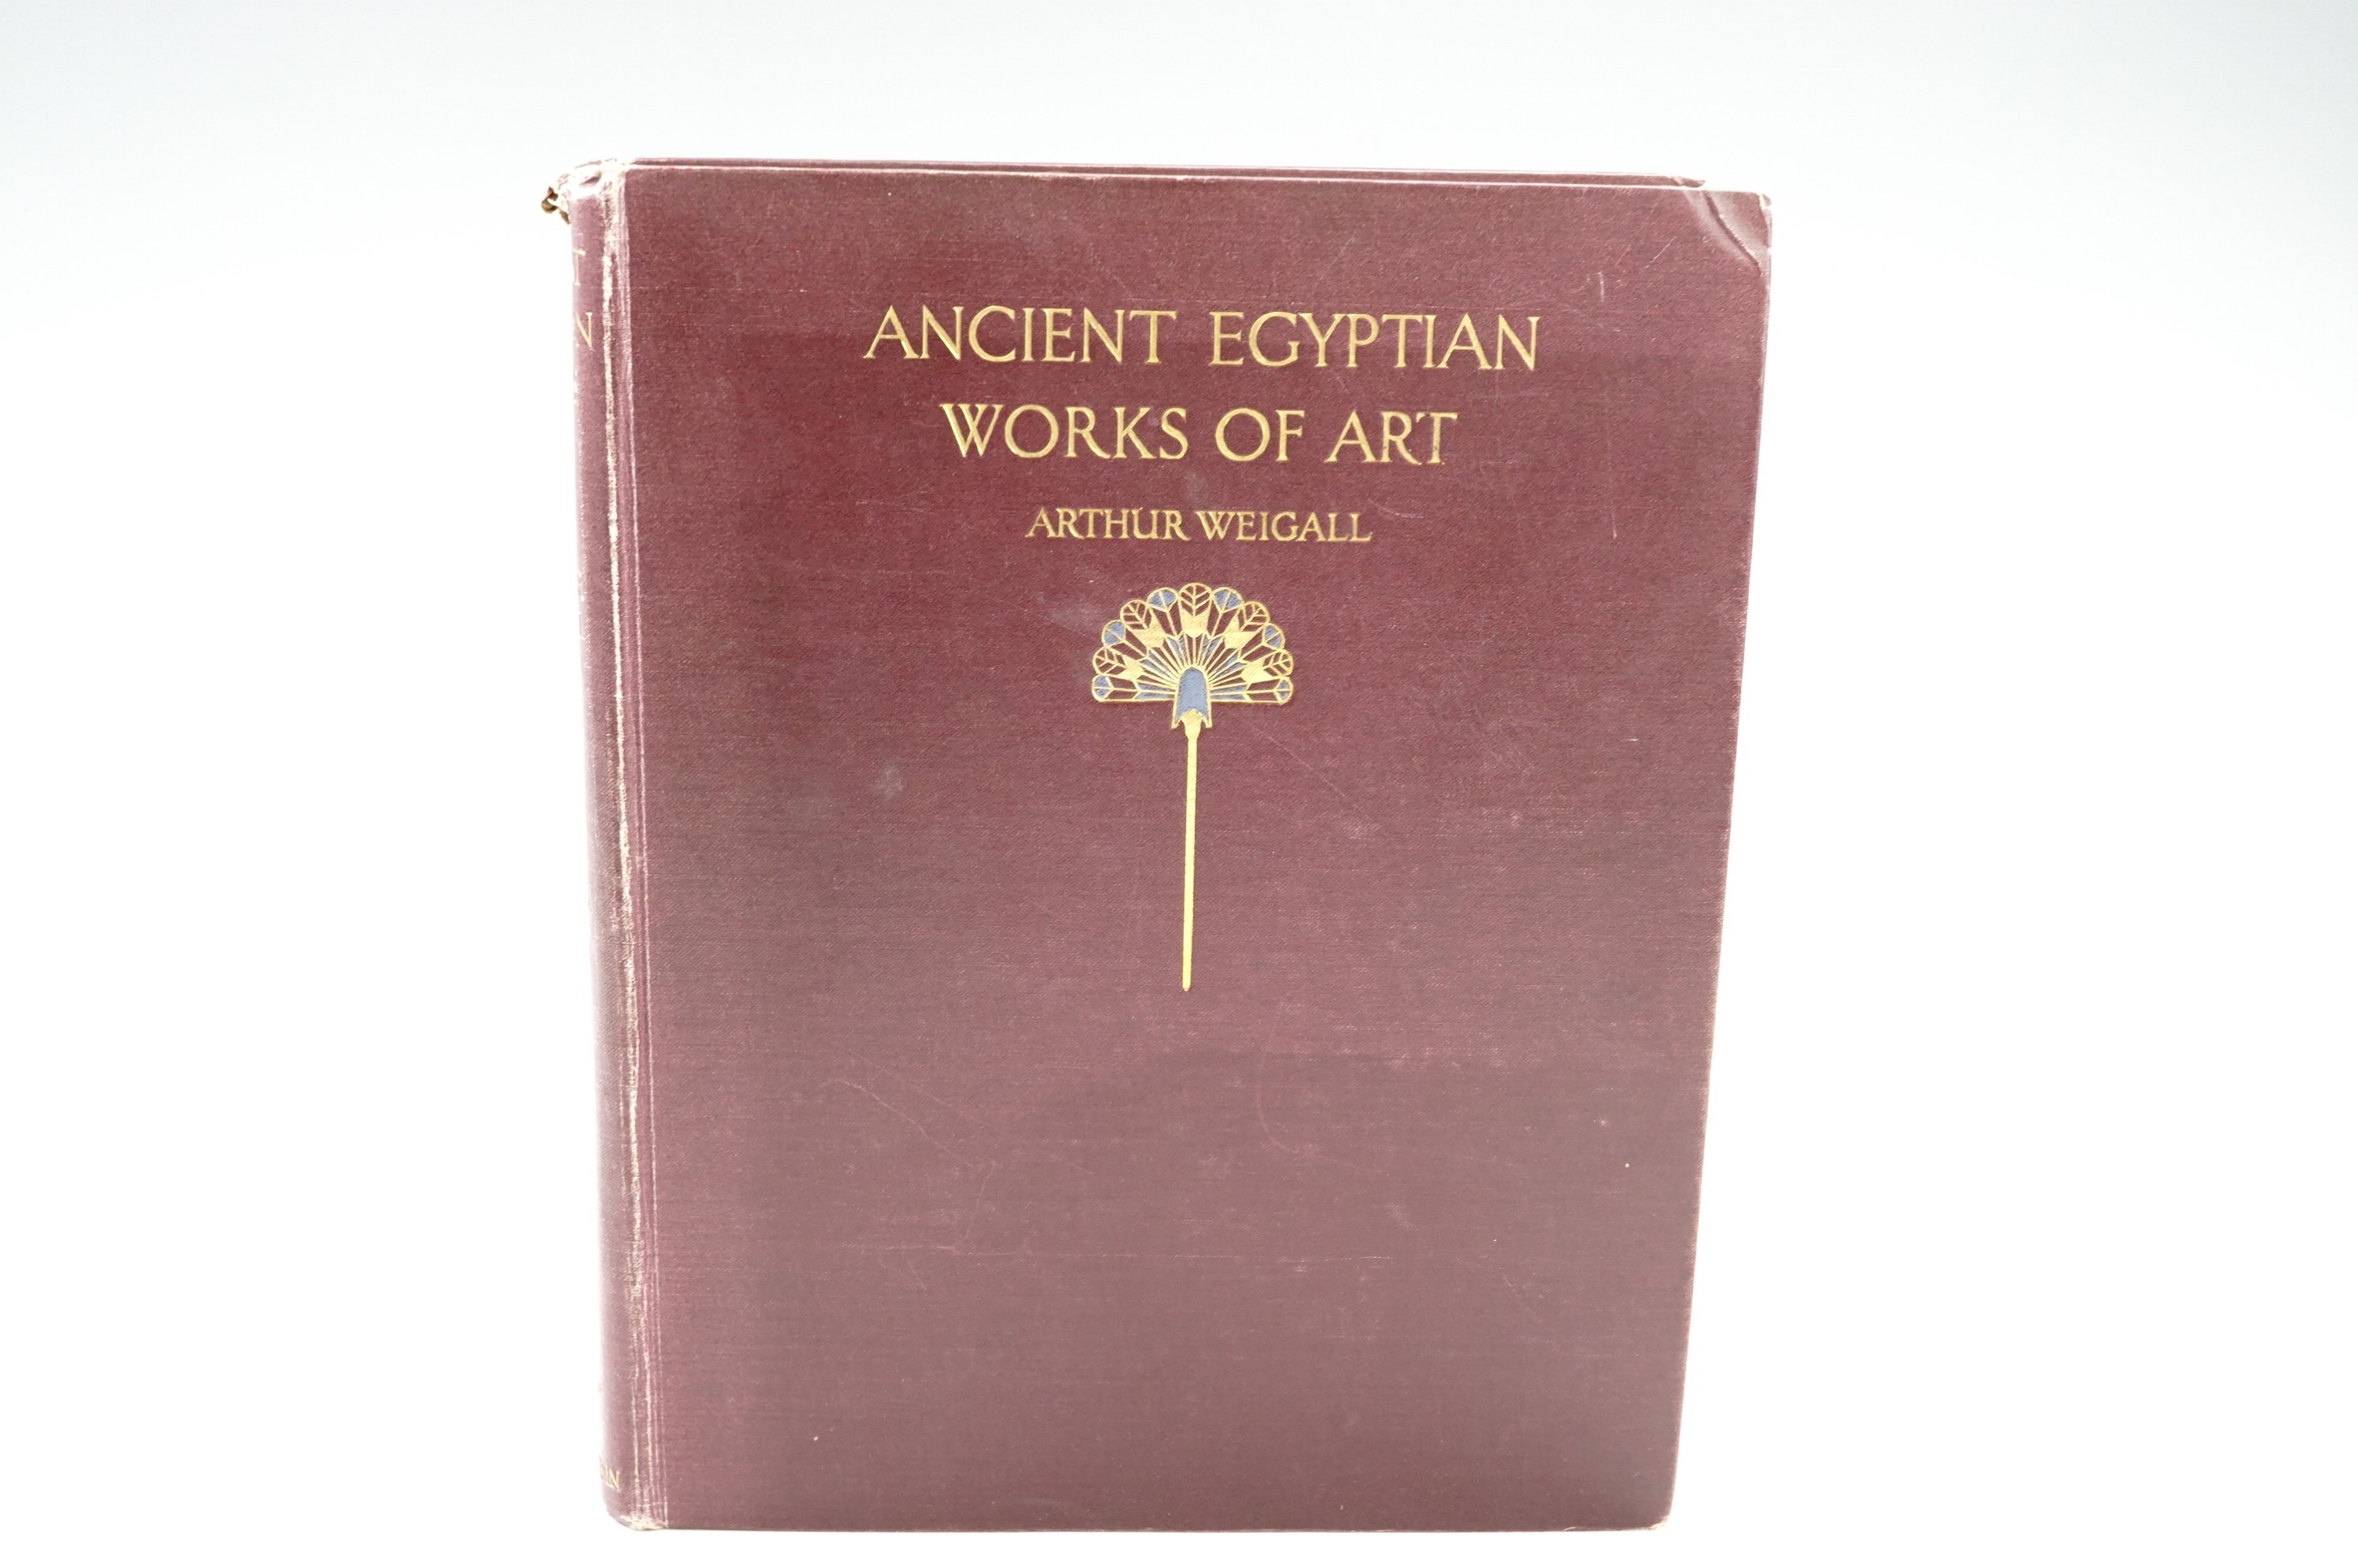 Arthur Weigall, "Ancient Egyptian Works of Art", Fisher Unwin Ltd, 1924, ex-lib